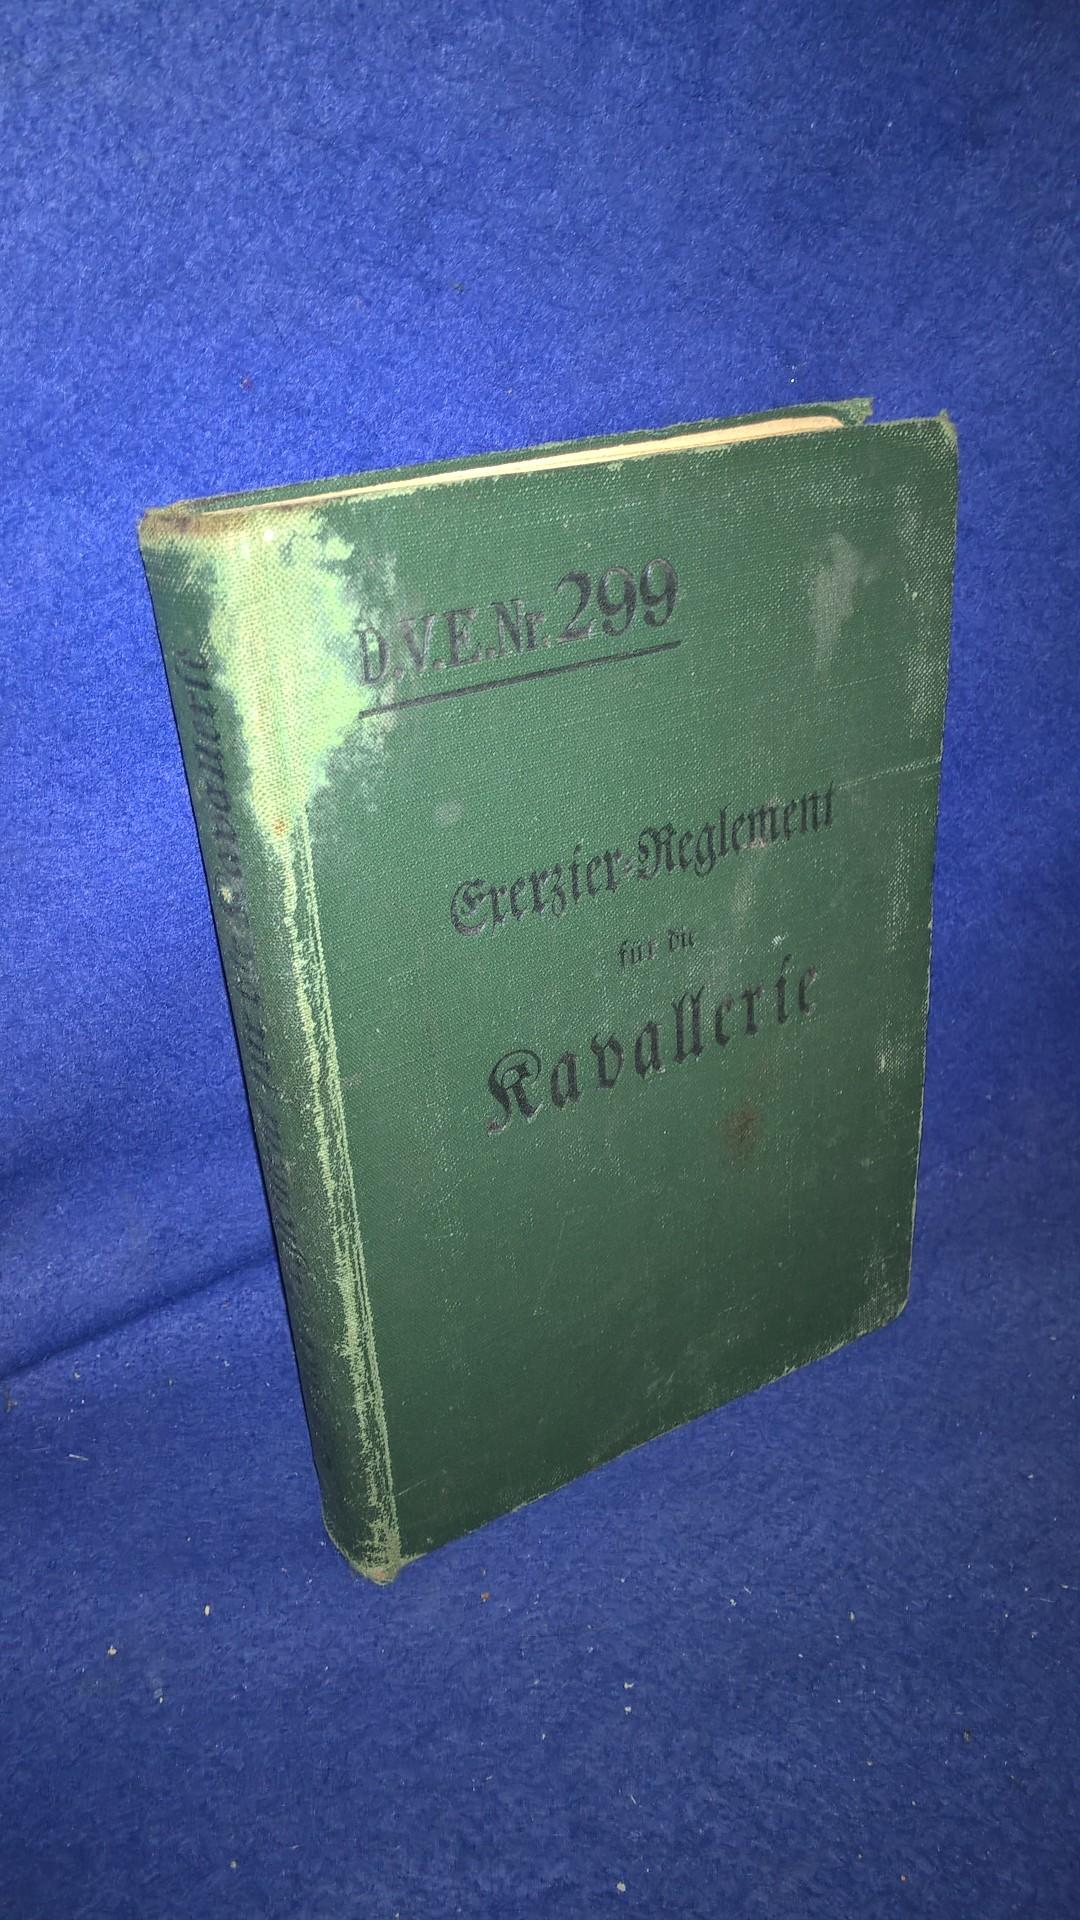 D.V.E. Nr. 299. Exerzier-Reglement für die Kavallerie,1909.